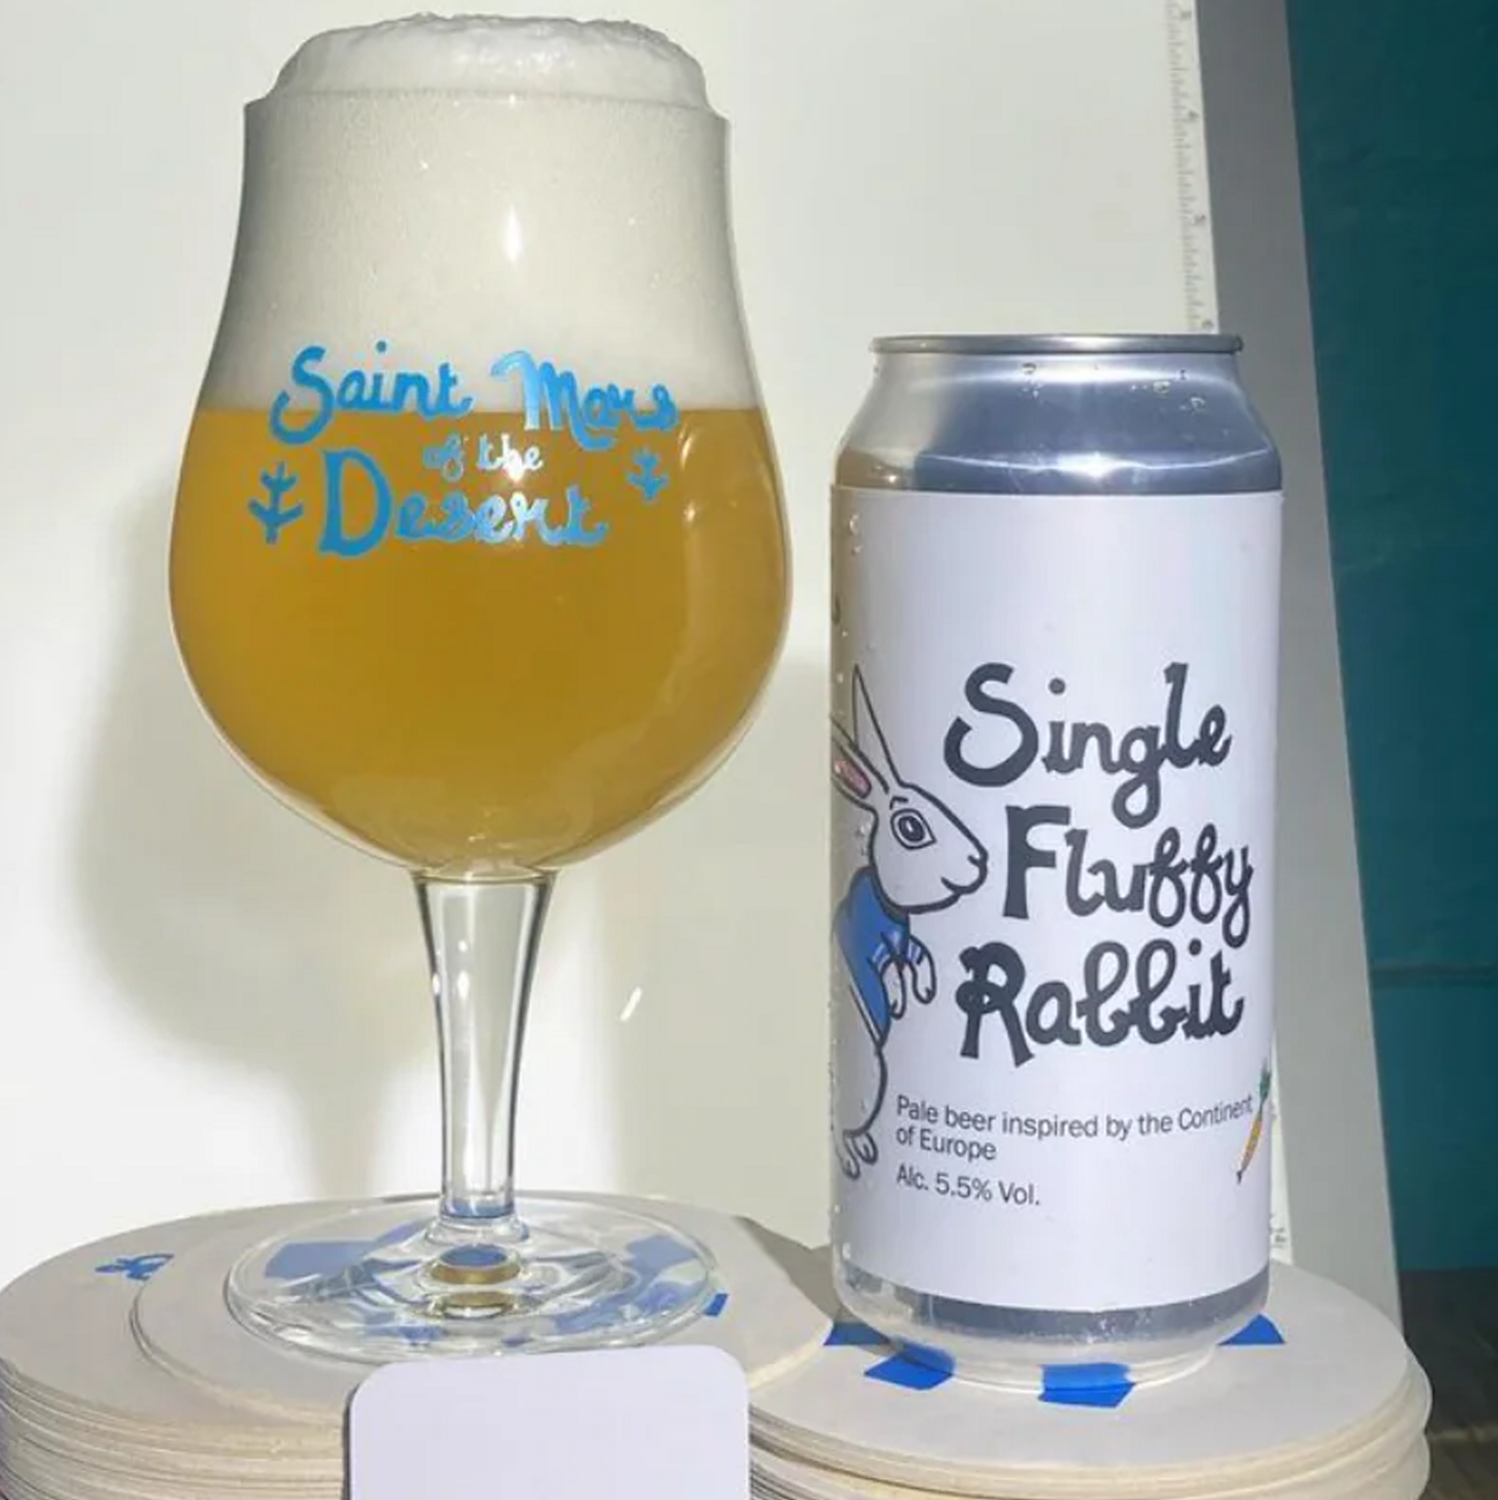 Saint Mars of the Desert Single Fluffy Rabbit Pale Ale